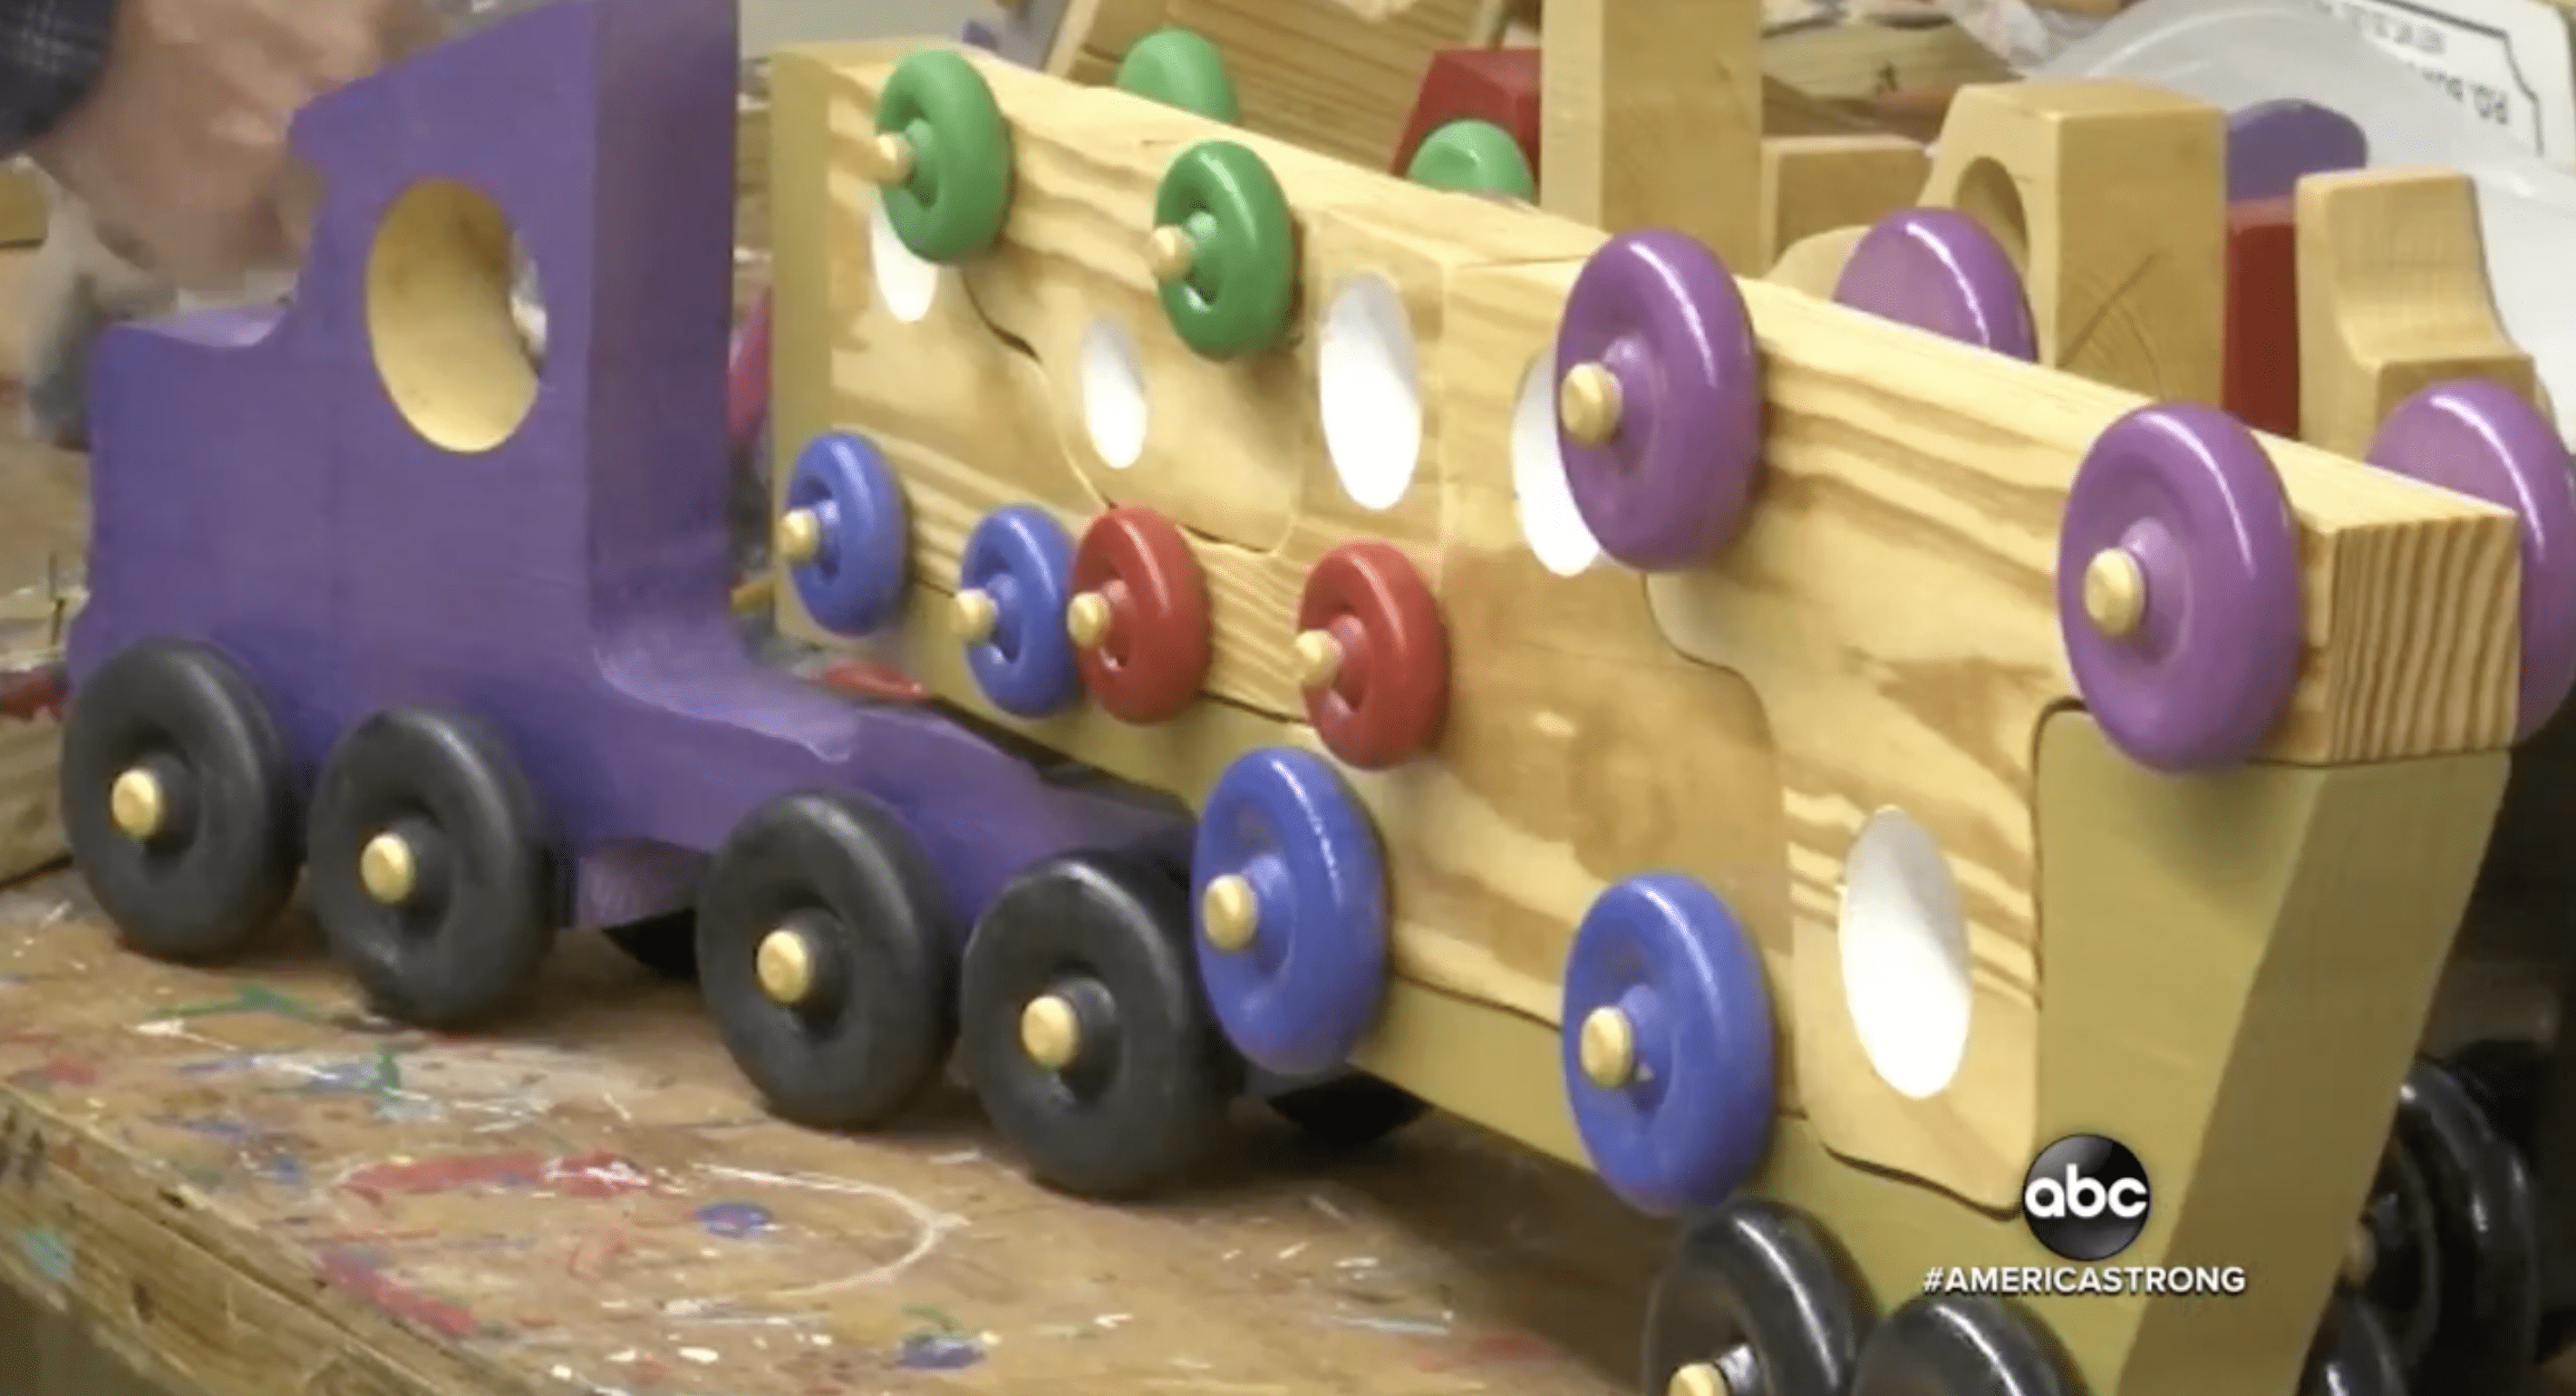 A wooden toy truck | Source: facebook.com/WorldNewsTonight